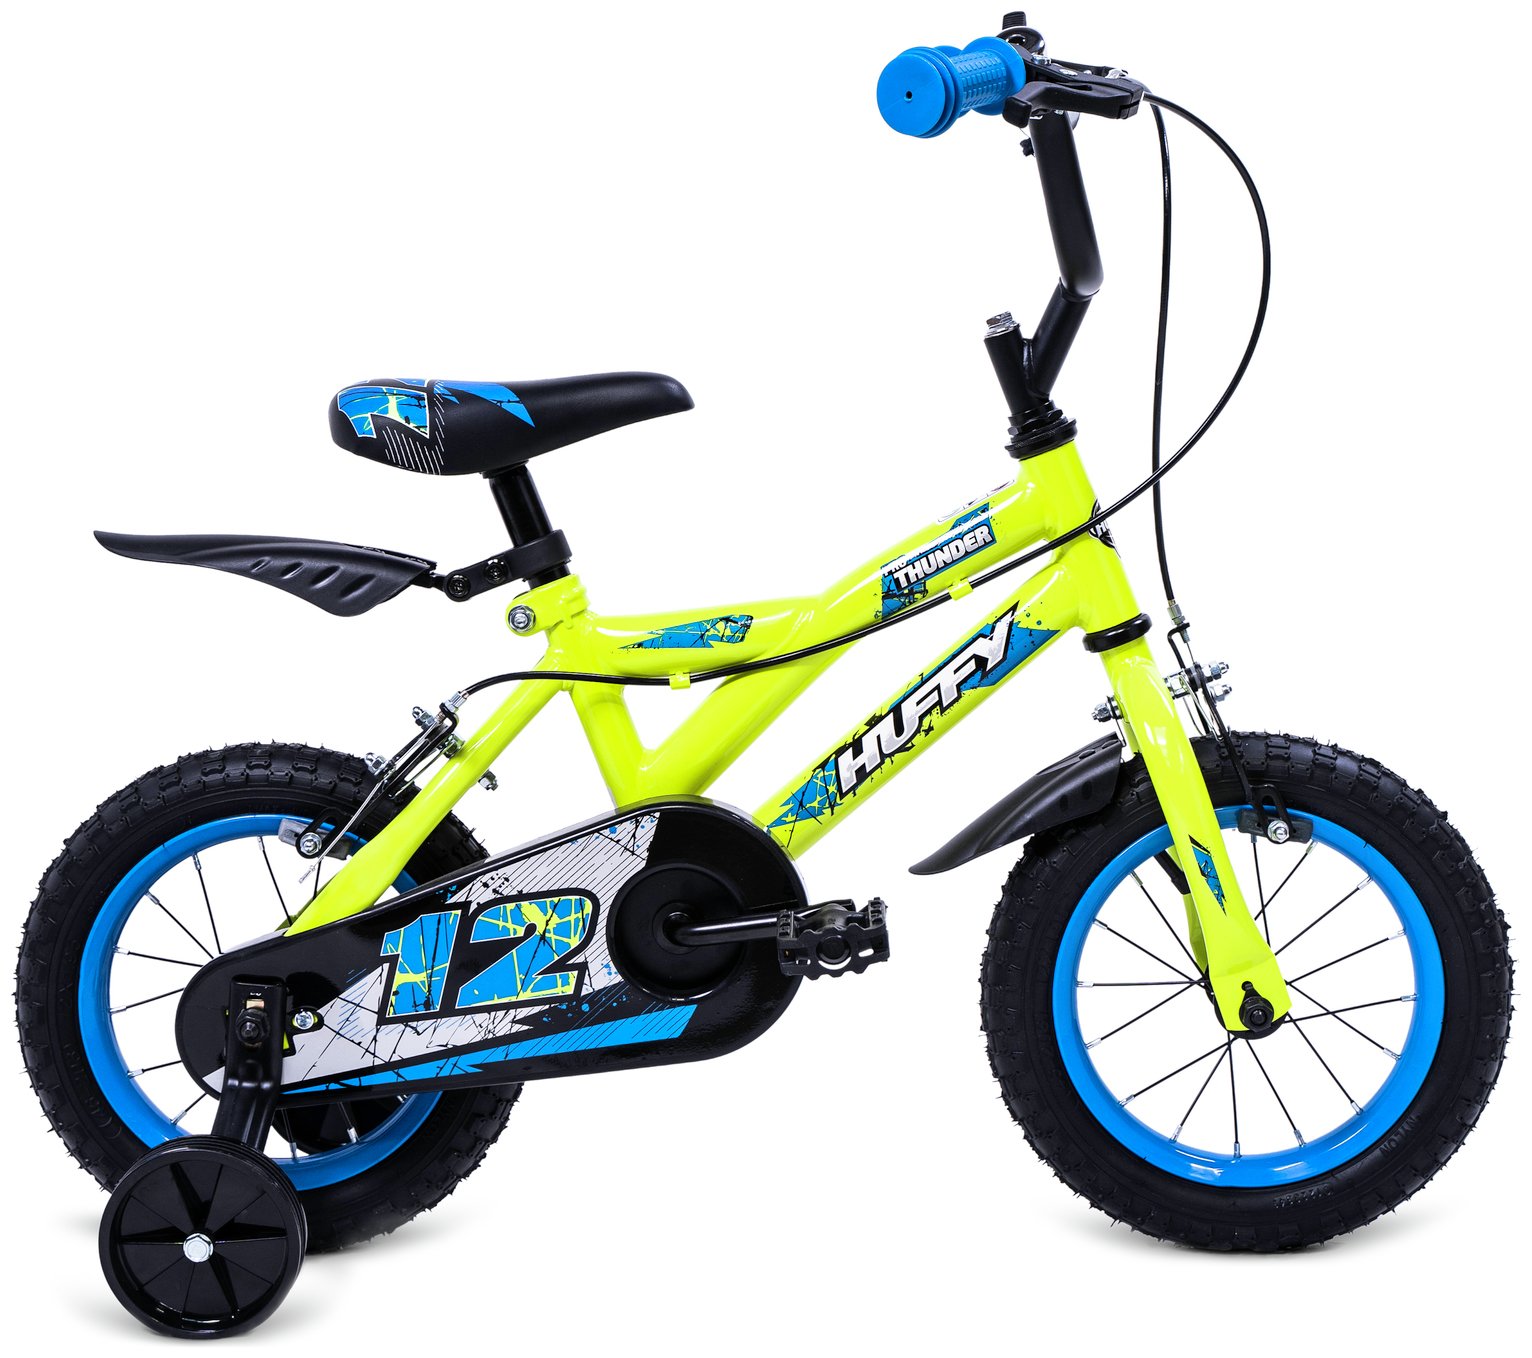 Huffy Pro Thunder 12 inch Wheel Size Kids Bike - Yellow